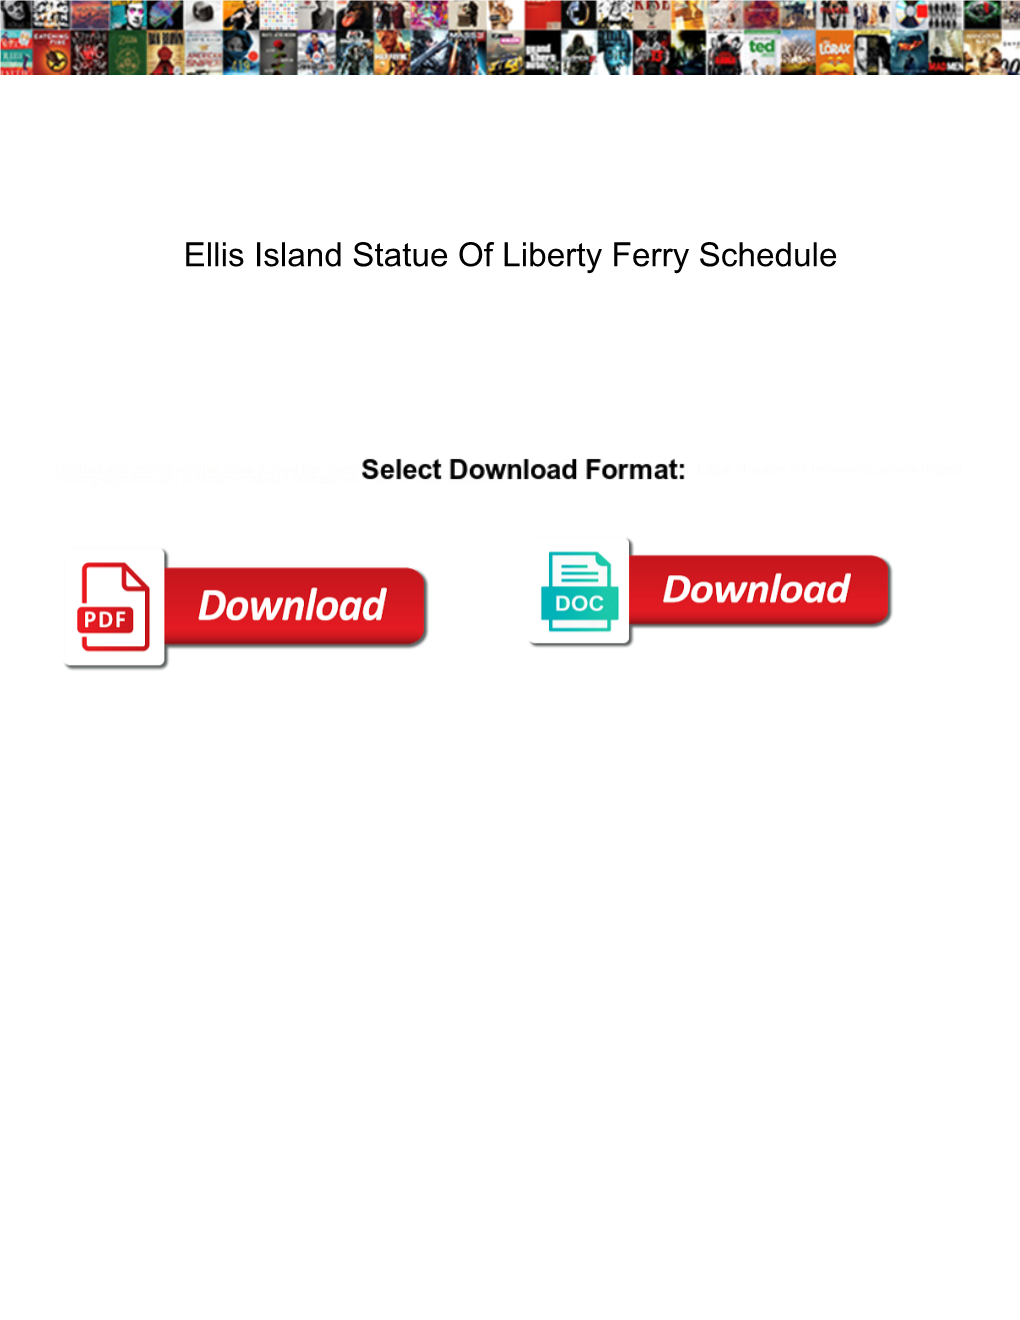 Ellis Island Statue of Liberty Ferry Schedule